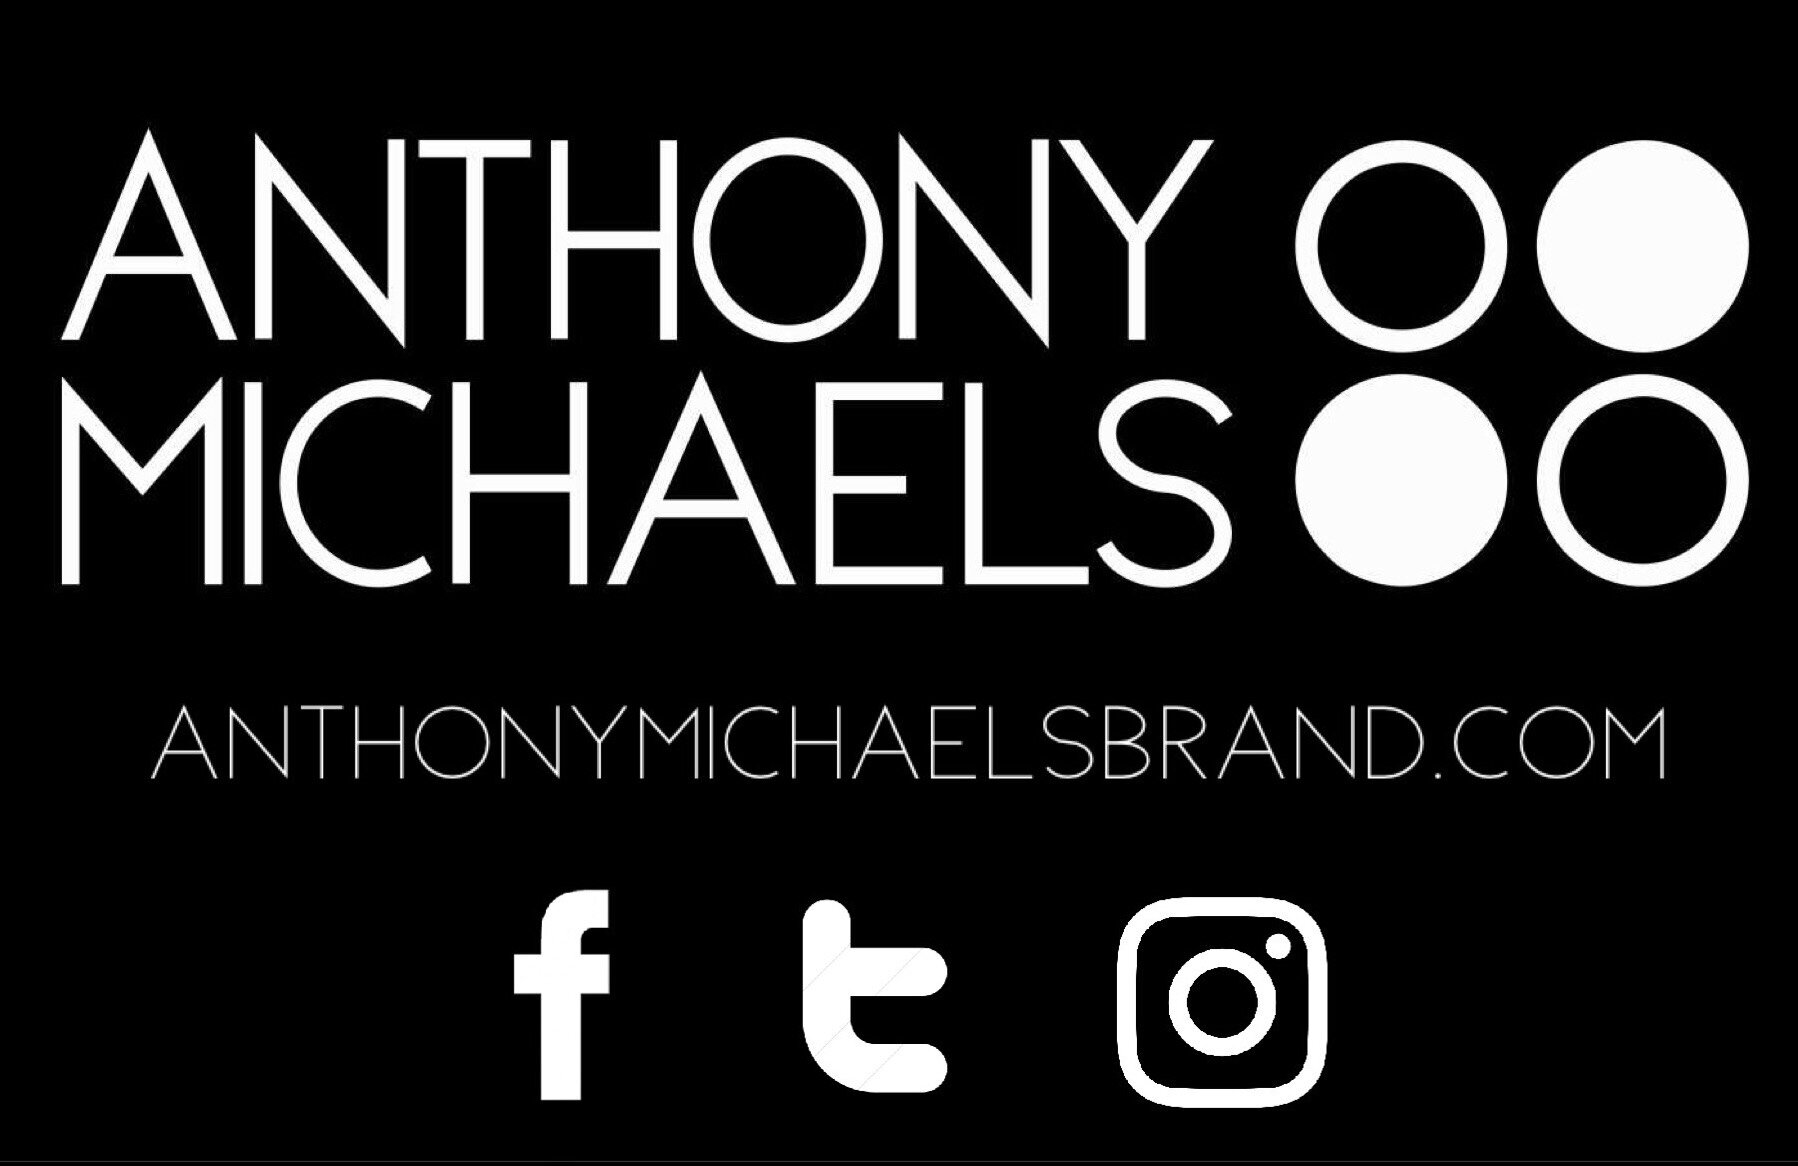 Anthony Michaels Brand